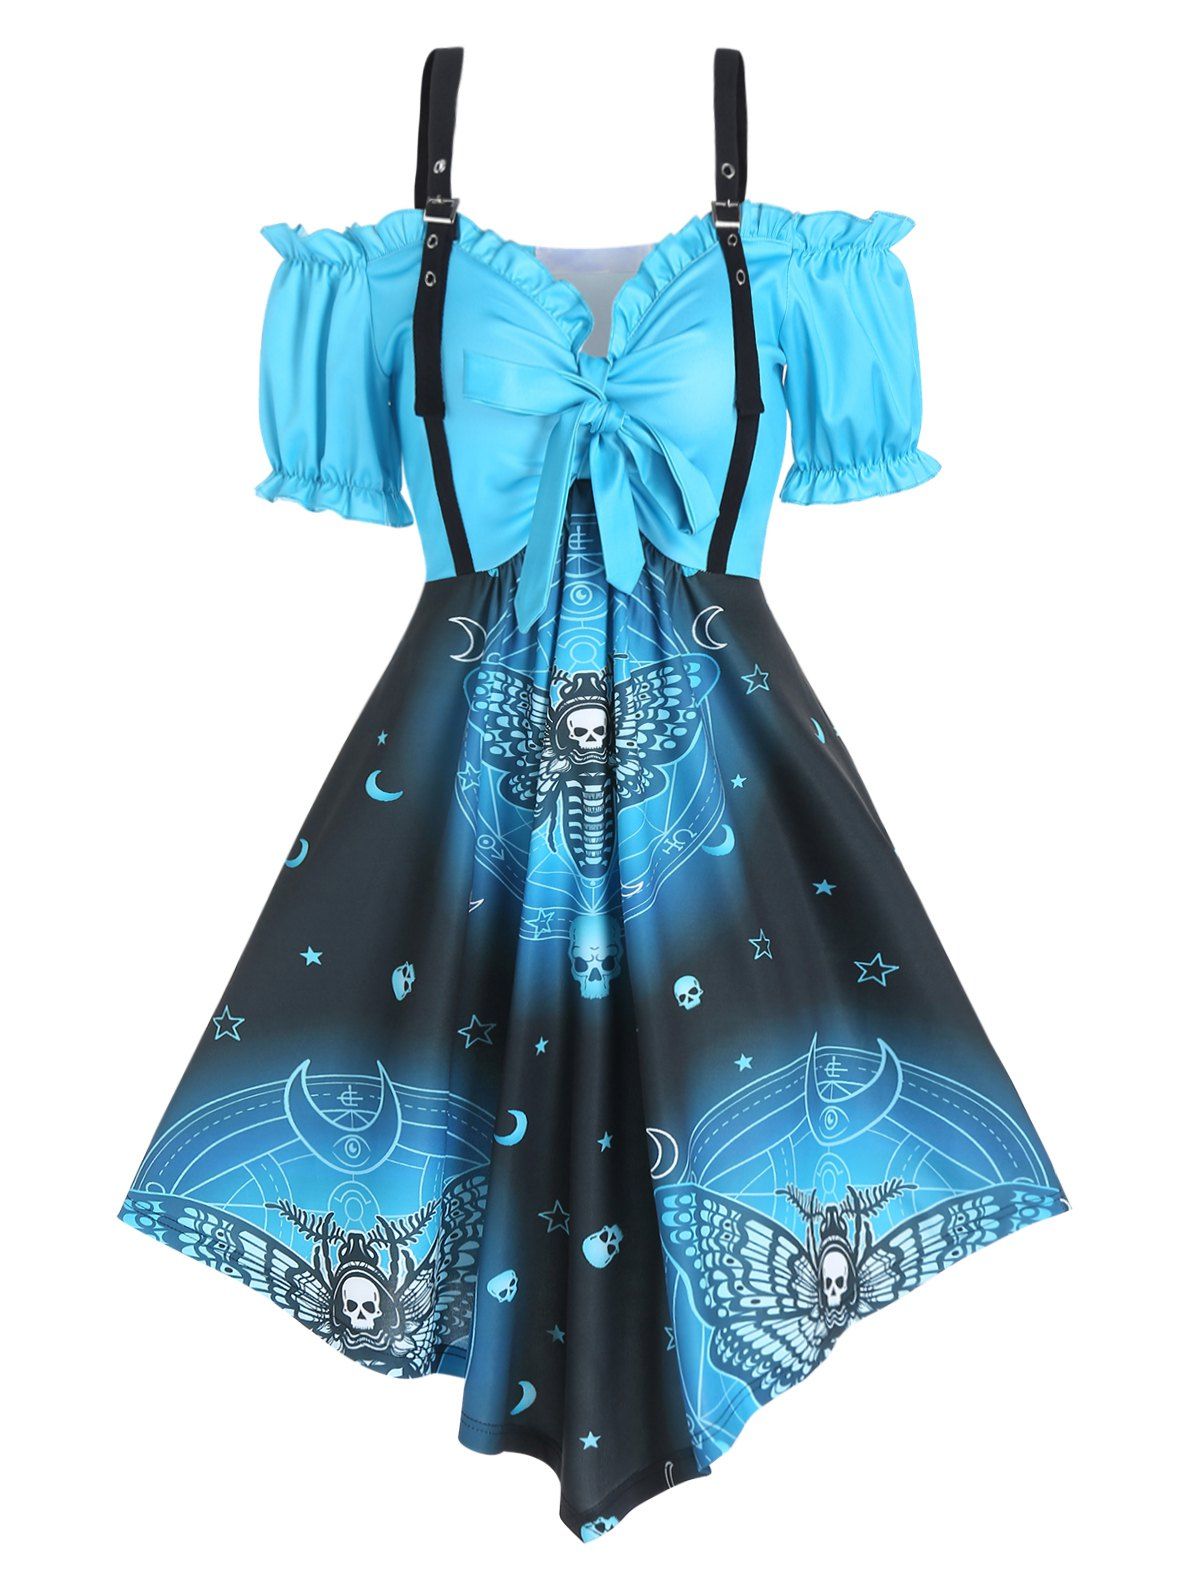 Gothic Dress Skull Butterfly Celestial Pattern Dress Cold Shoulder Ruffle Short Sleeve Bowknot Asymmetric Dress - LIGHT BLUE XL